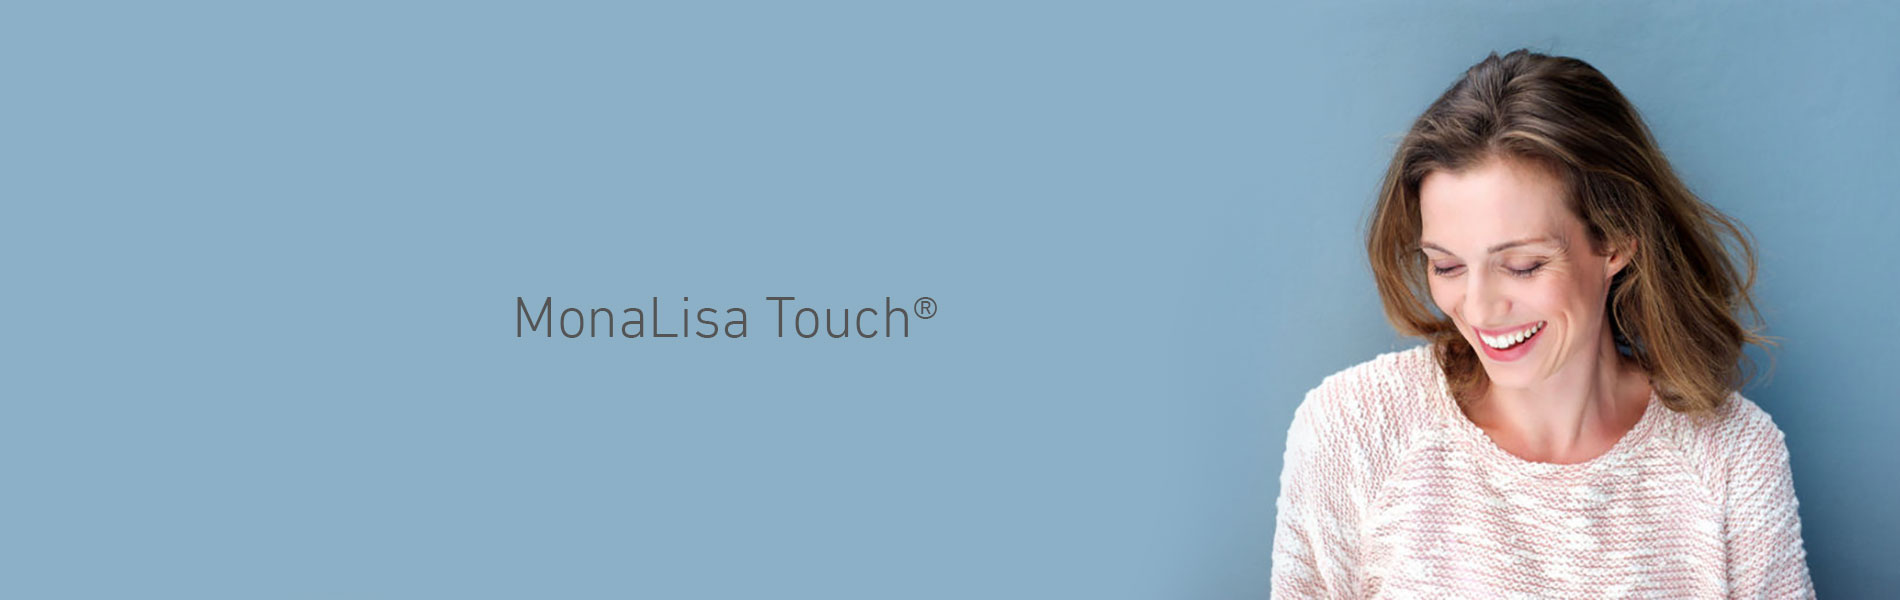 MonaLisa Touch® Southampton Treatments at CJA Aesthetics Clinics Hampshire